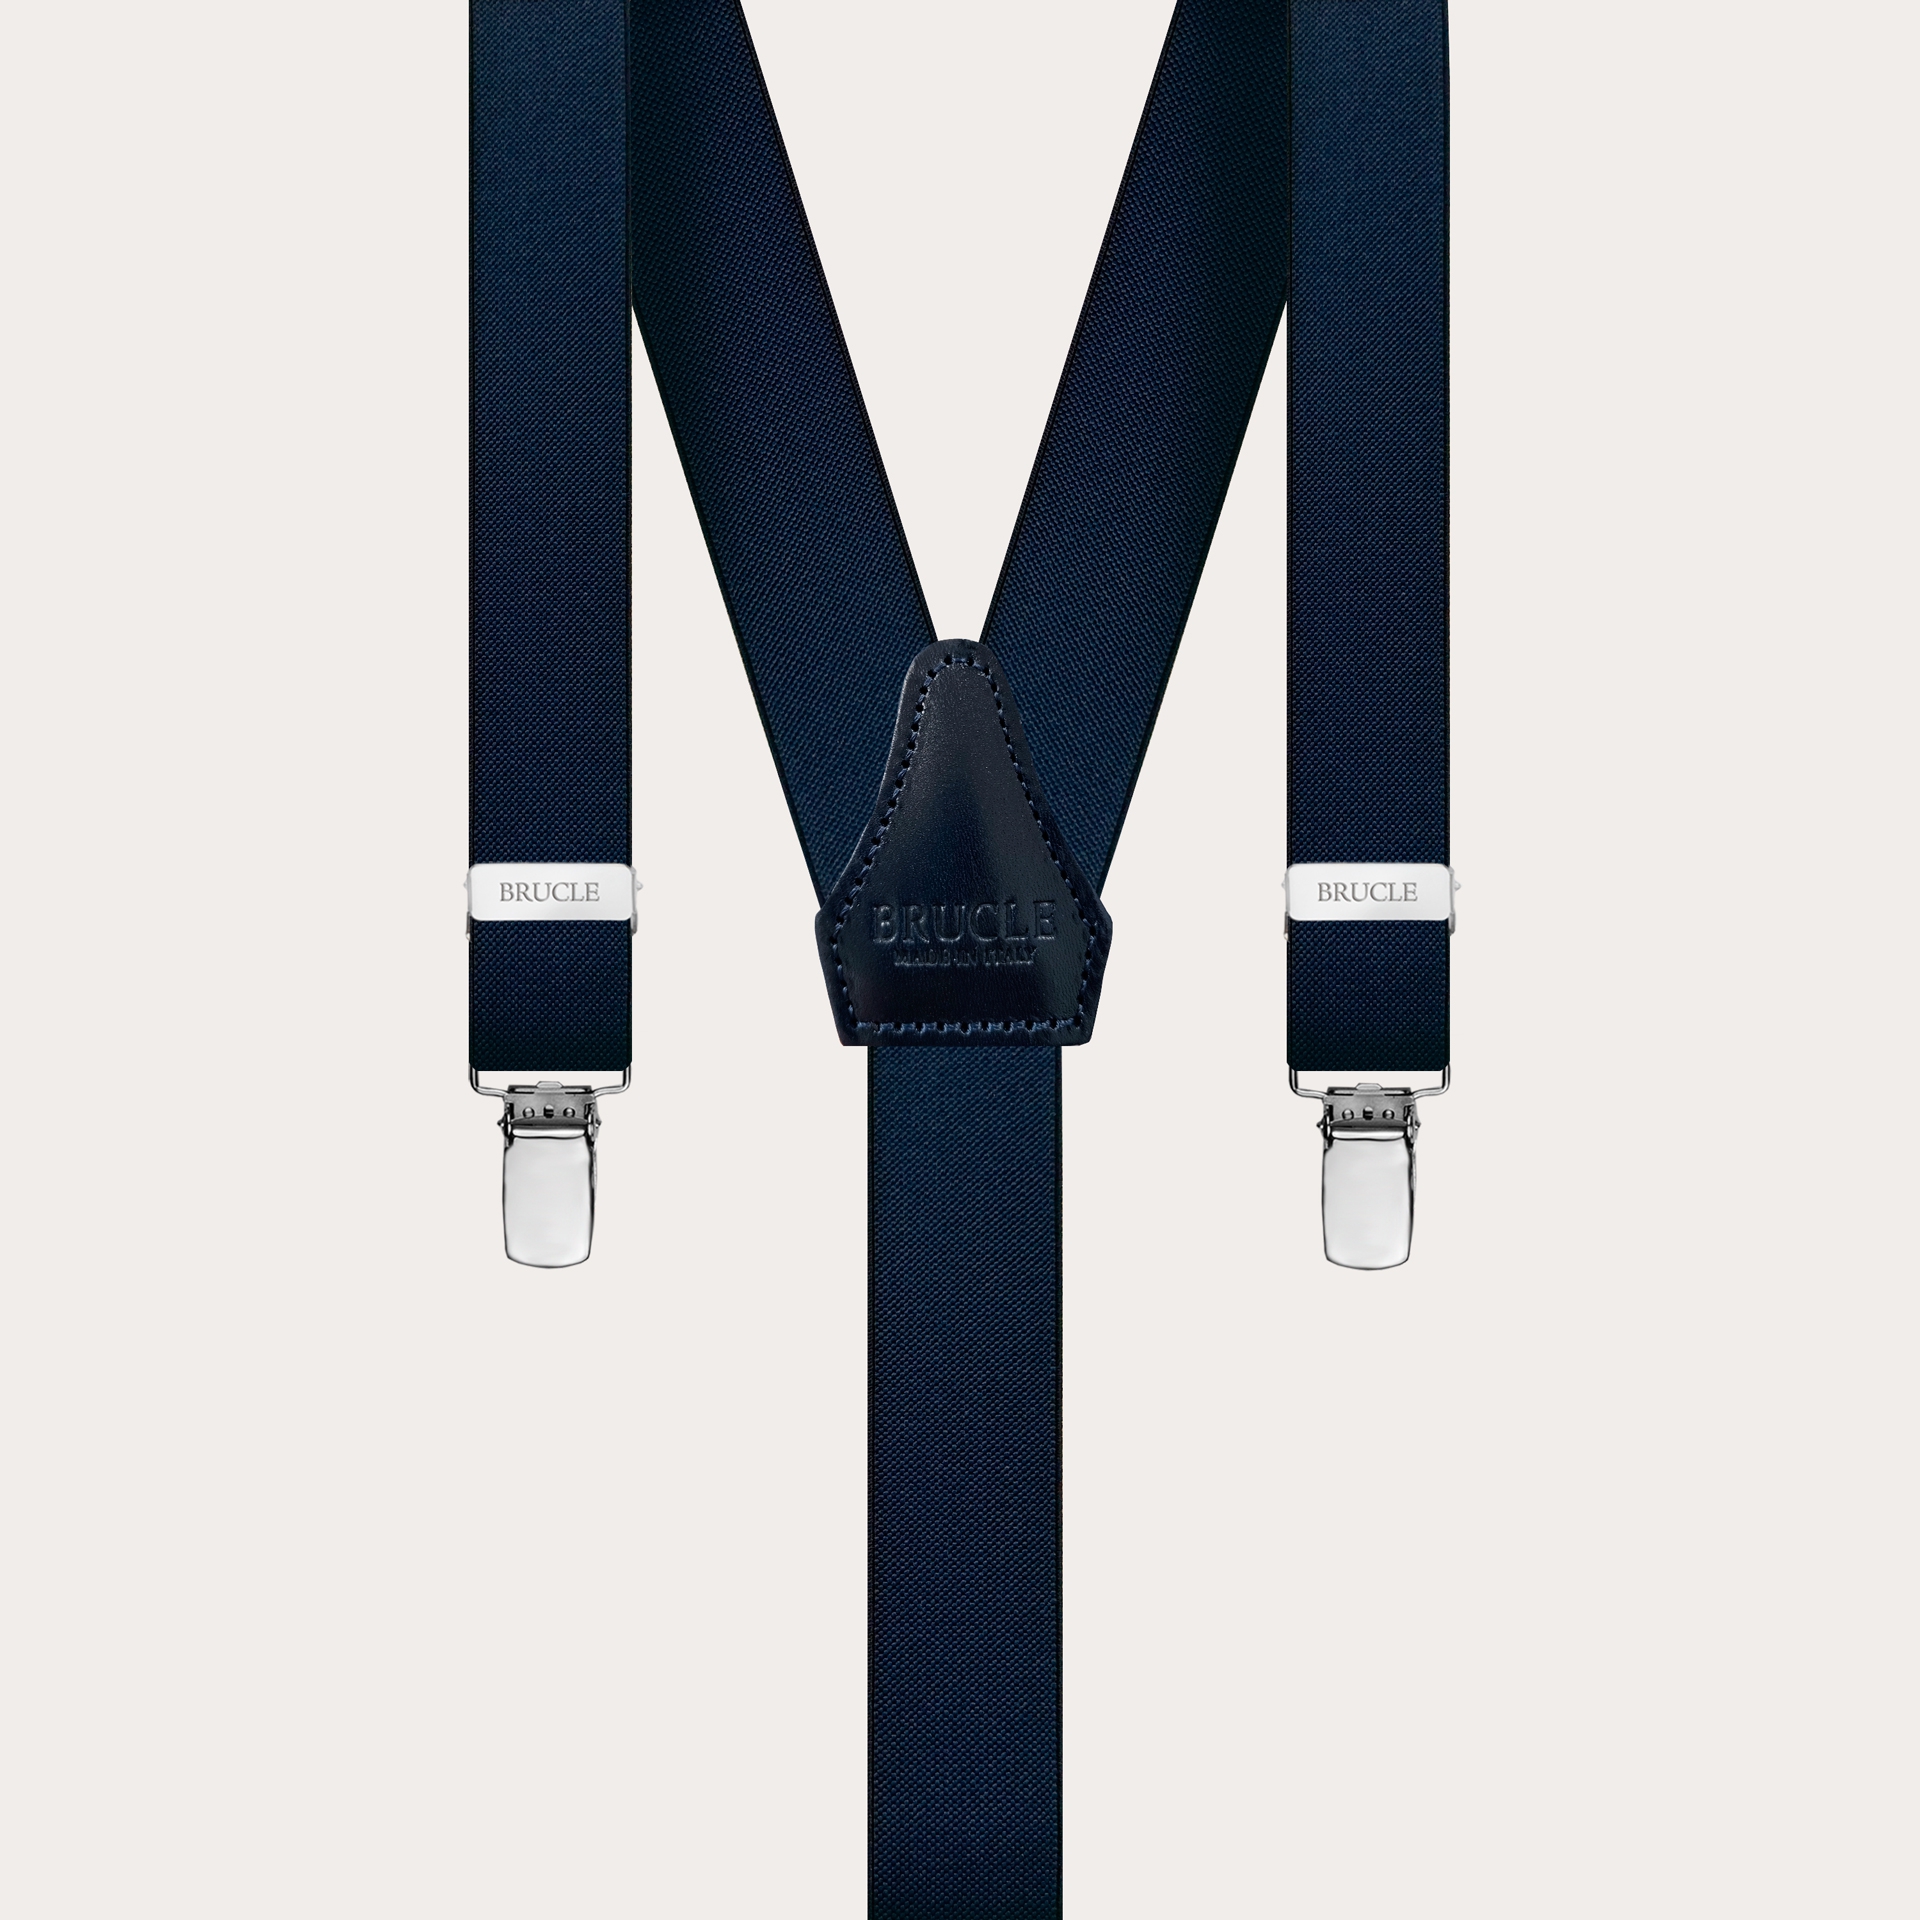 Skinny Y-shape elastic suspenders with clips, blue navy